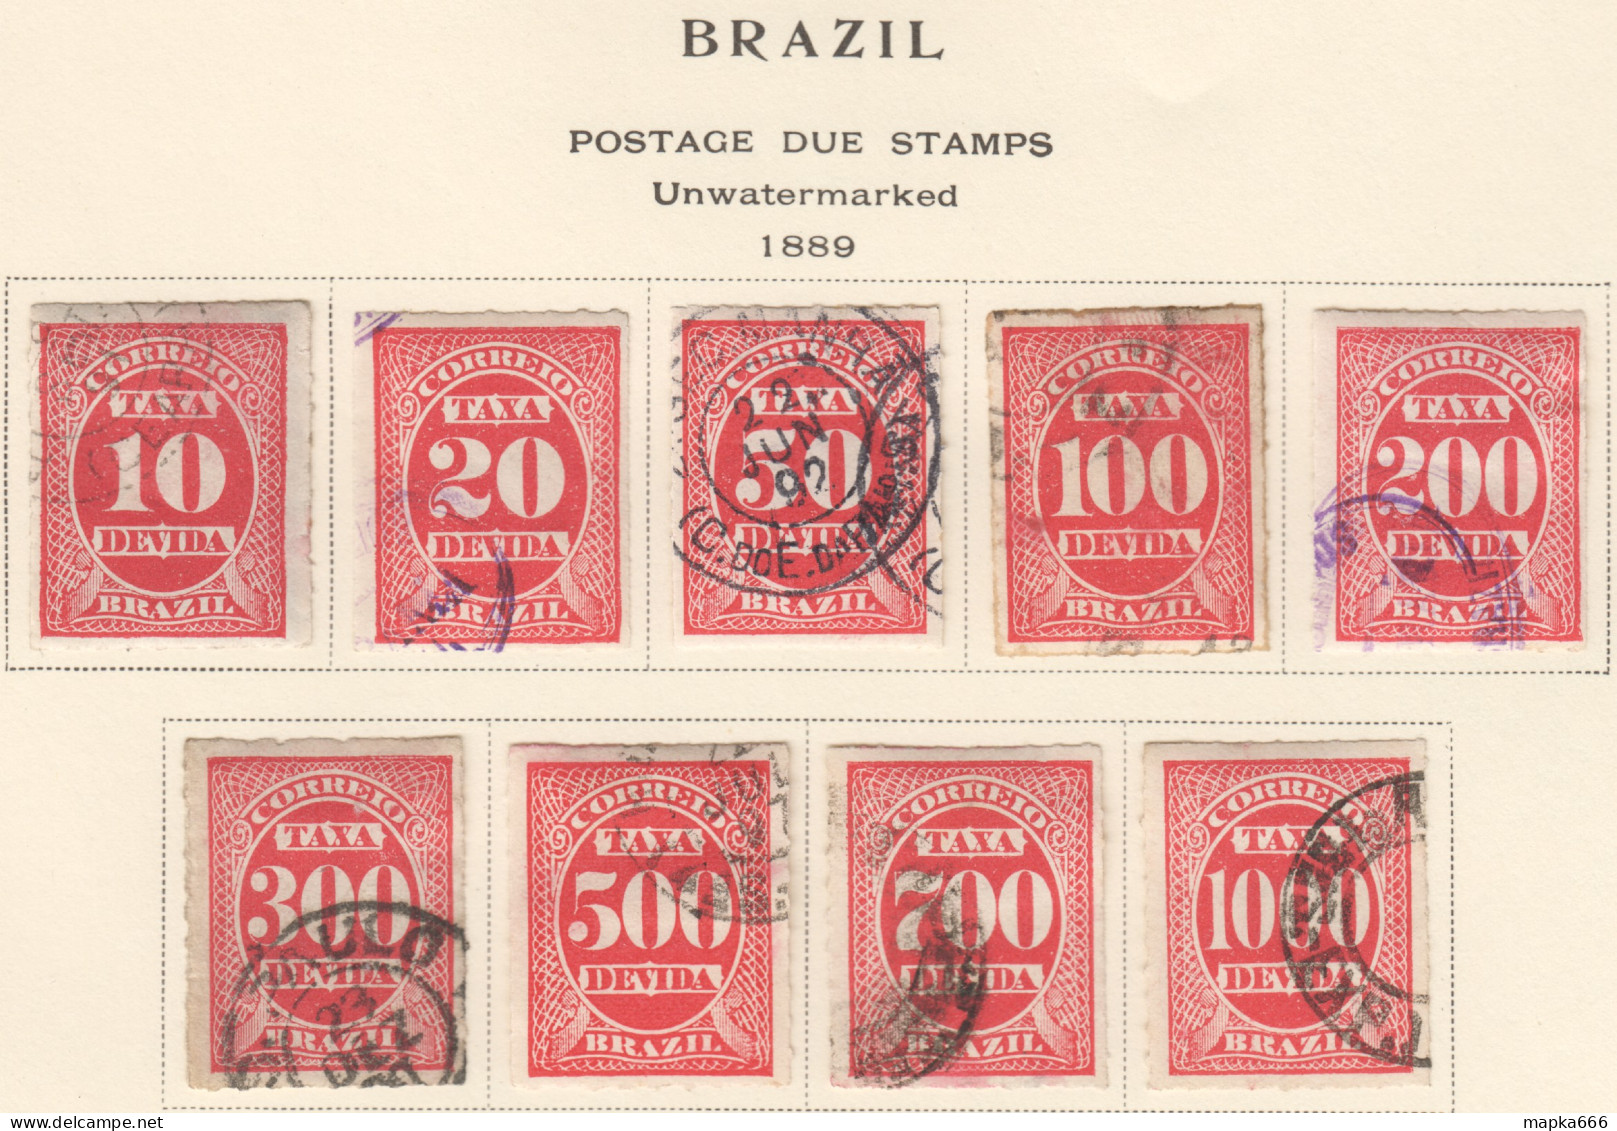 Bra184 1889 Brazil Postage Due Stamps Michel #1-9 85 Euro 1Set Used - Strafport